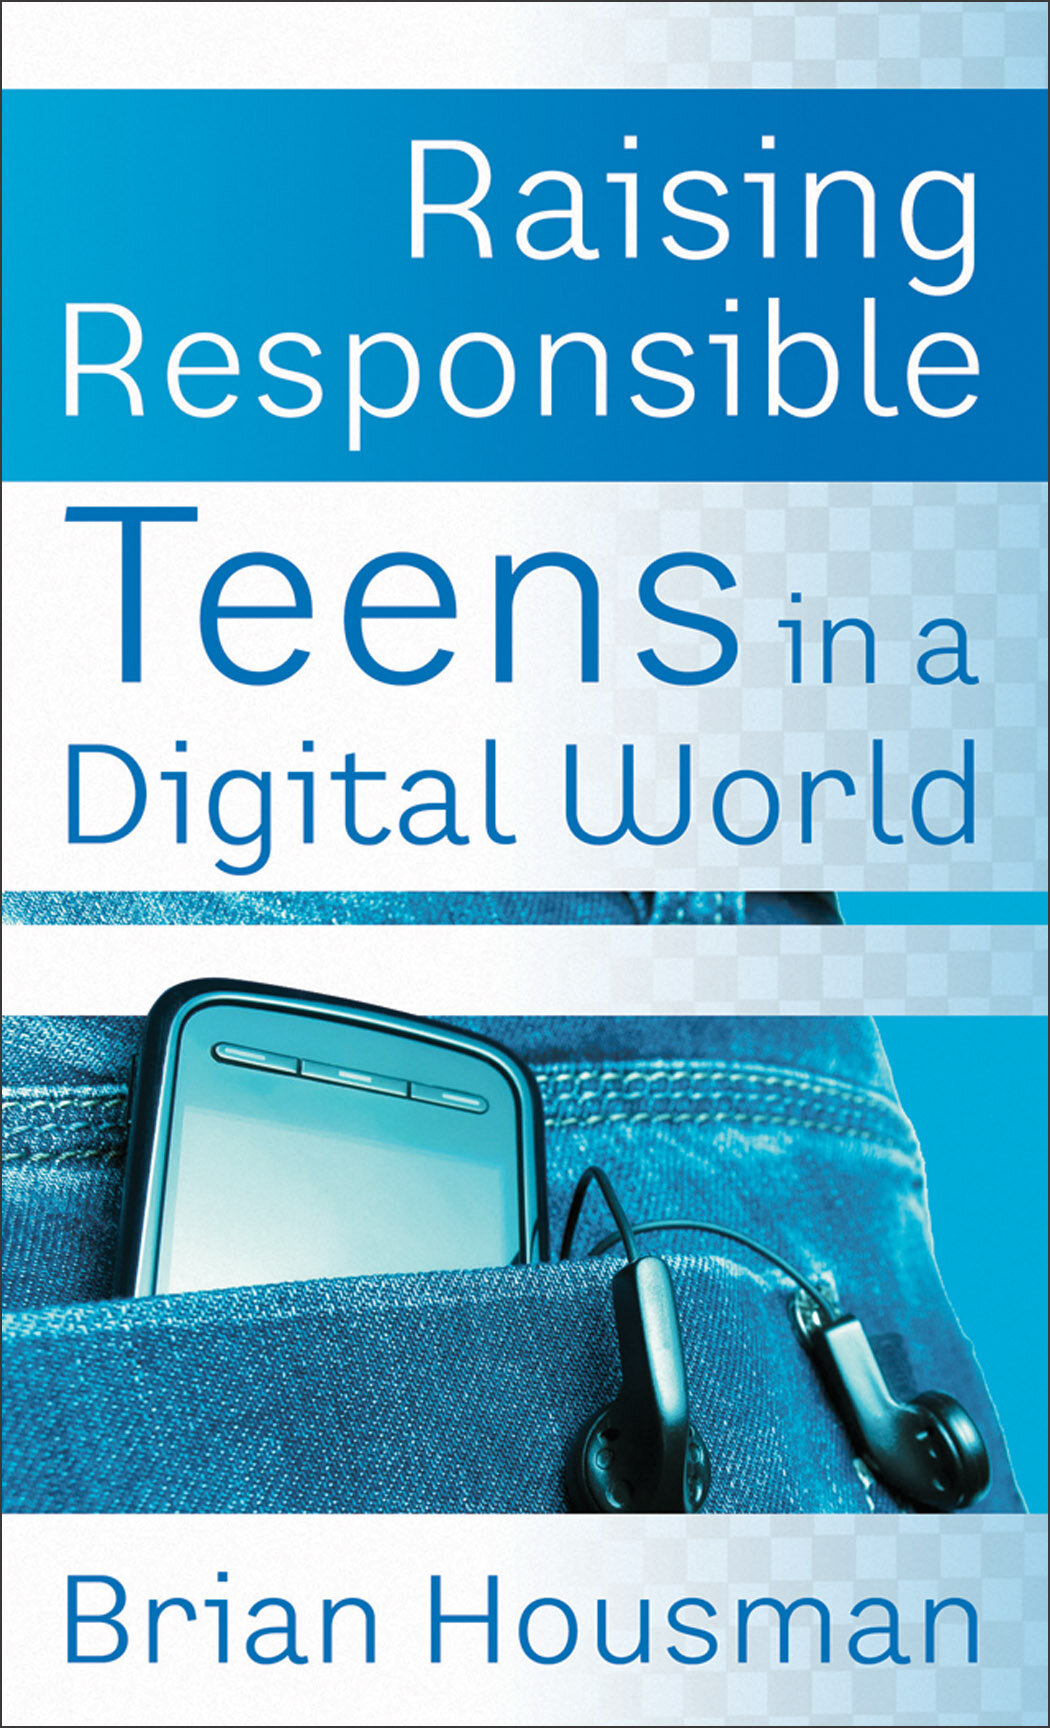 Raising Responsible Teens in a Digital World